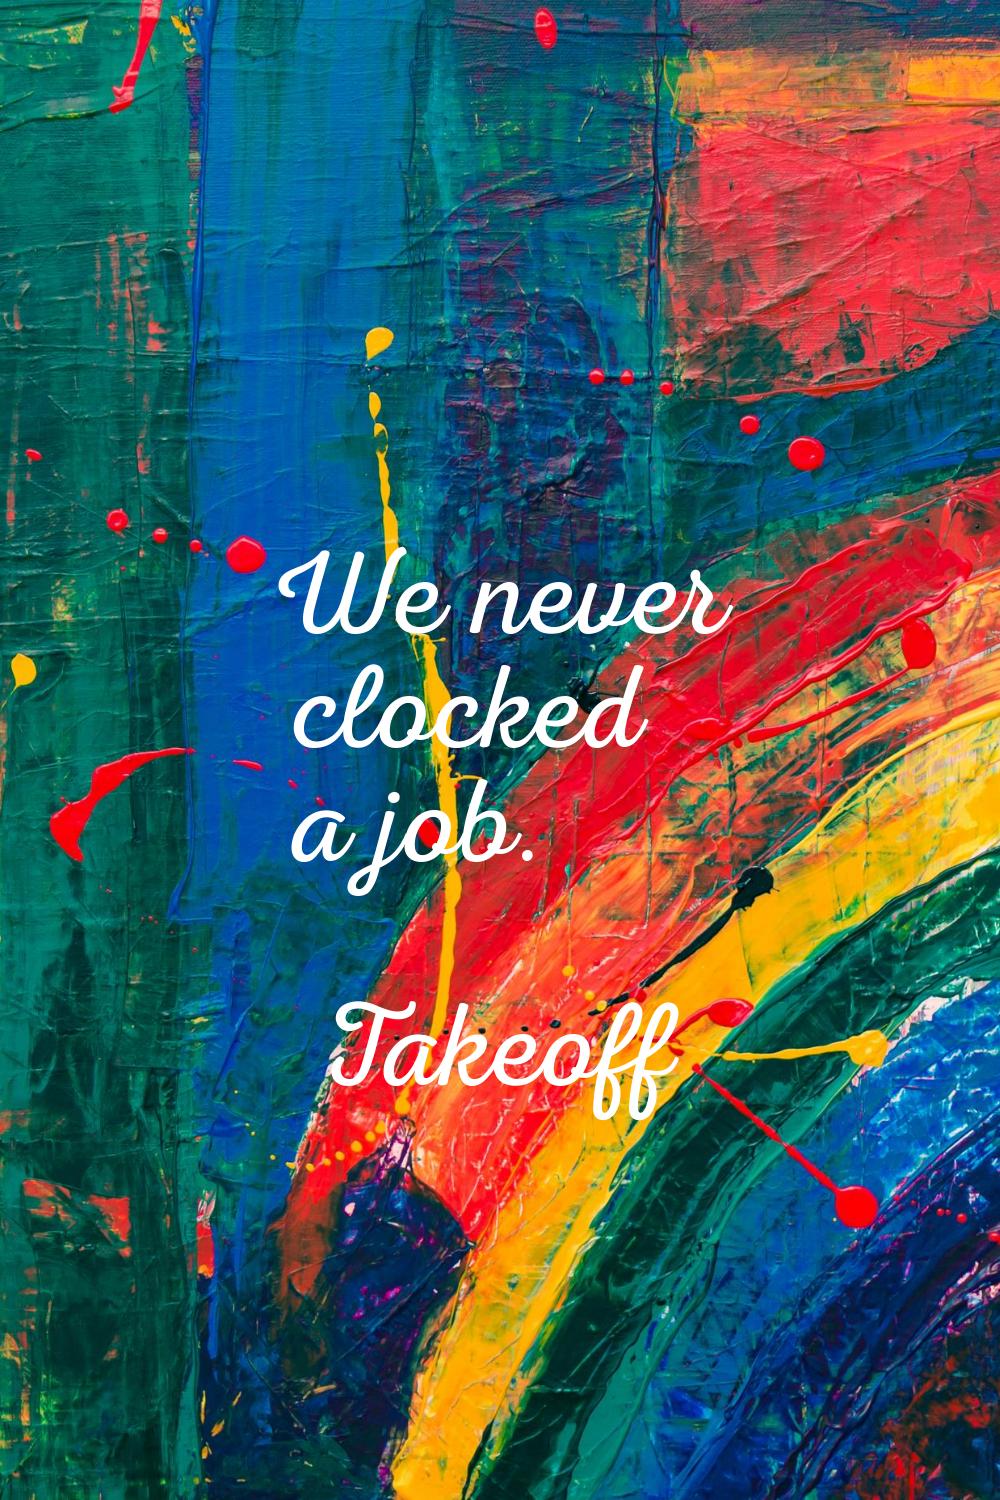 We never clocked a job.